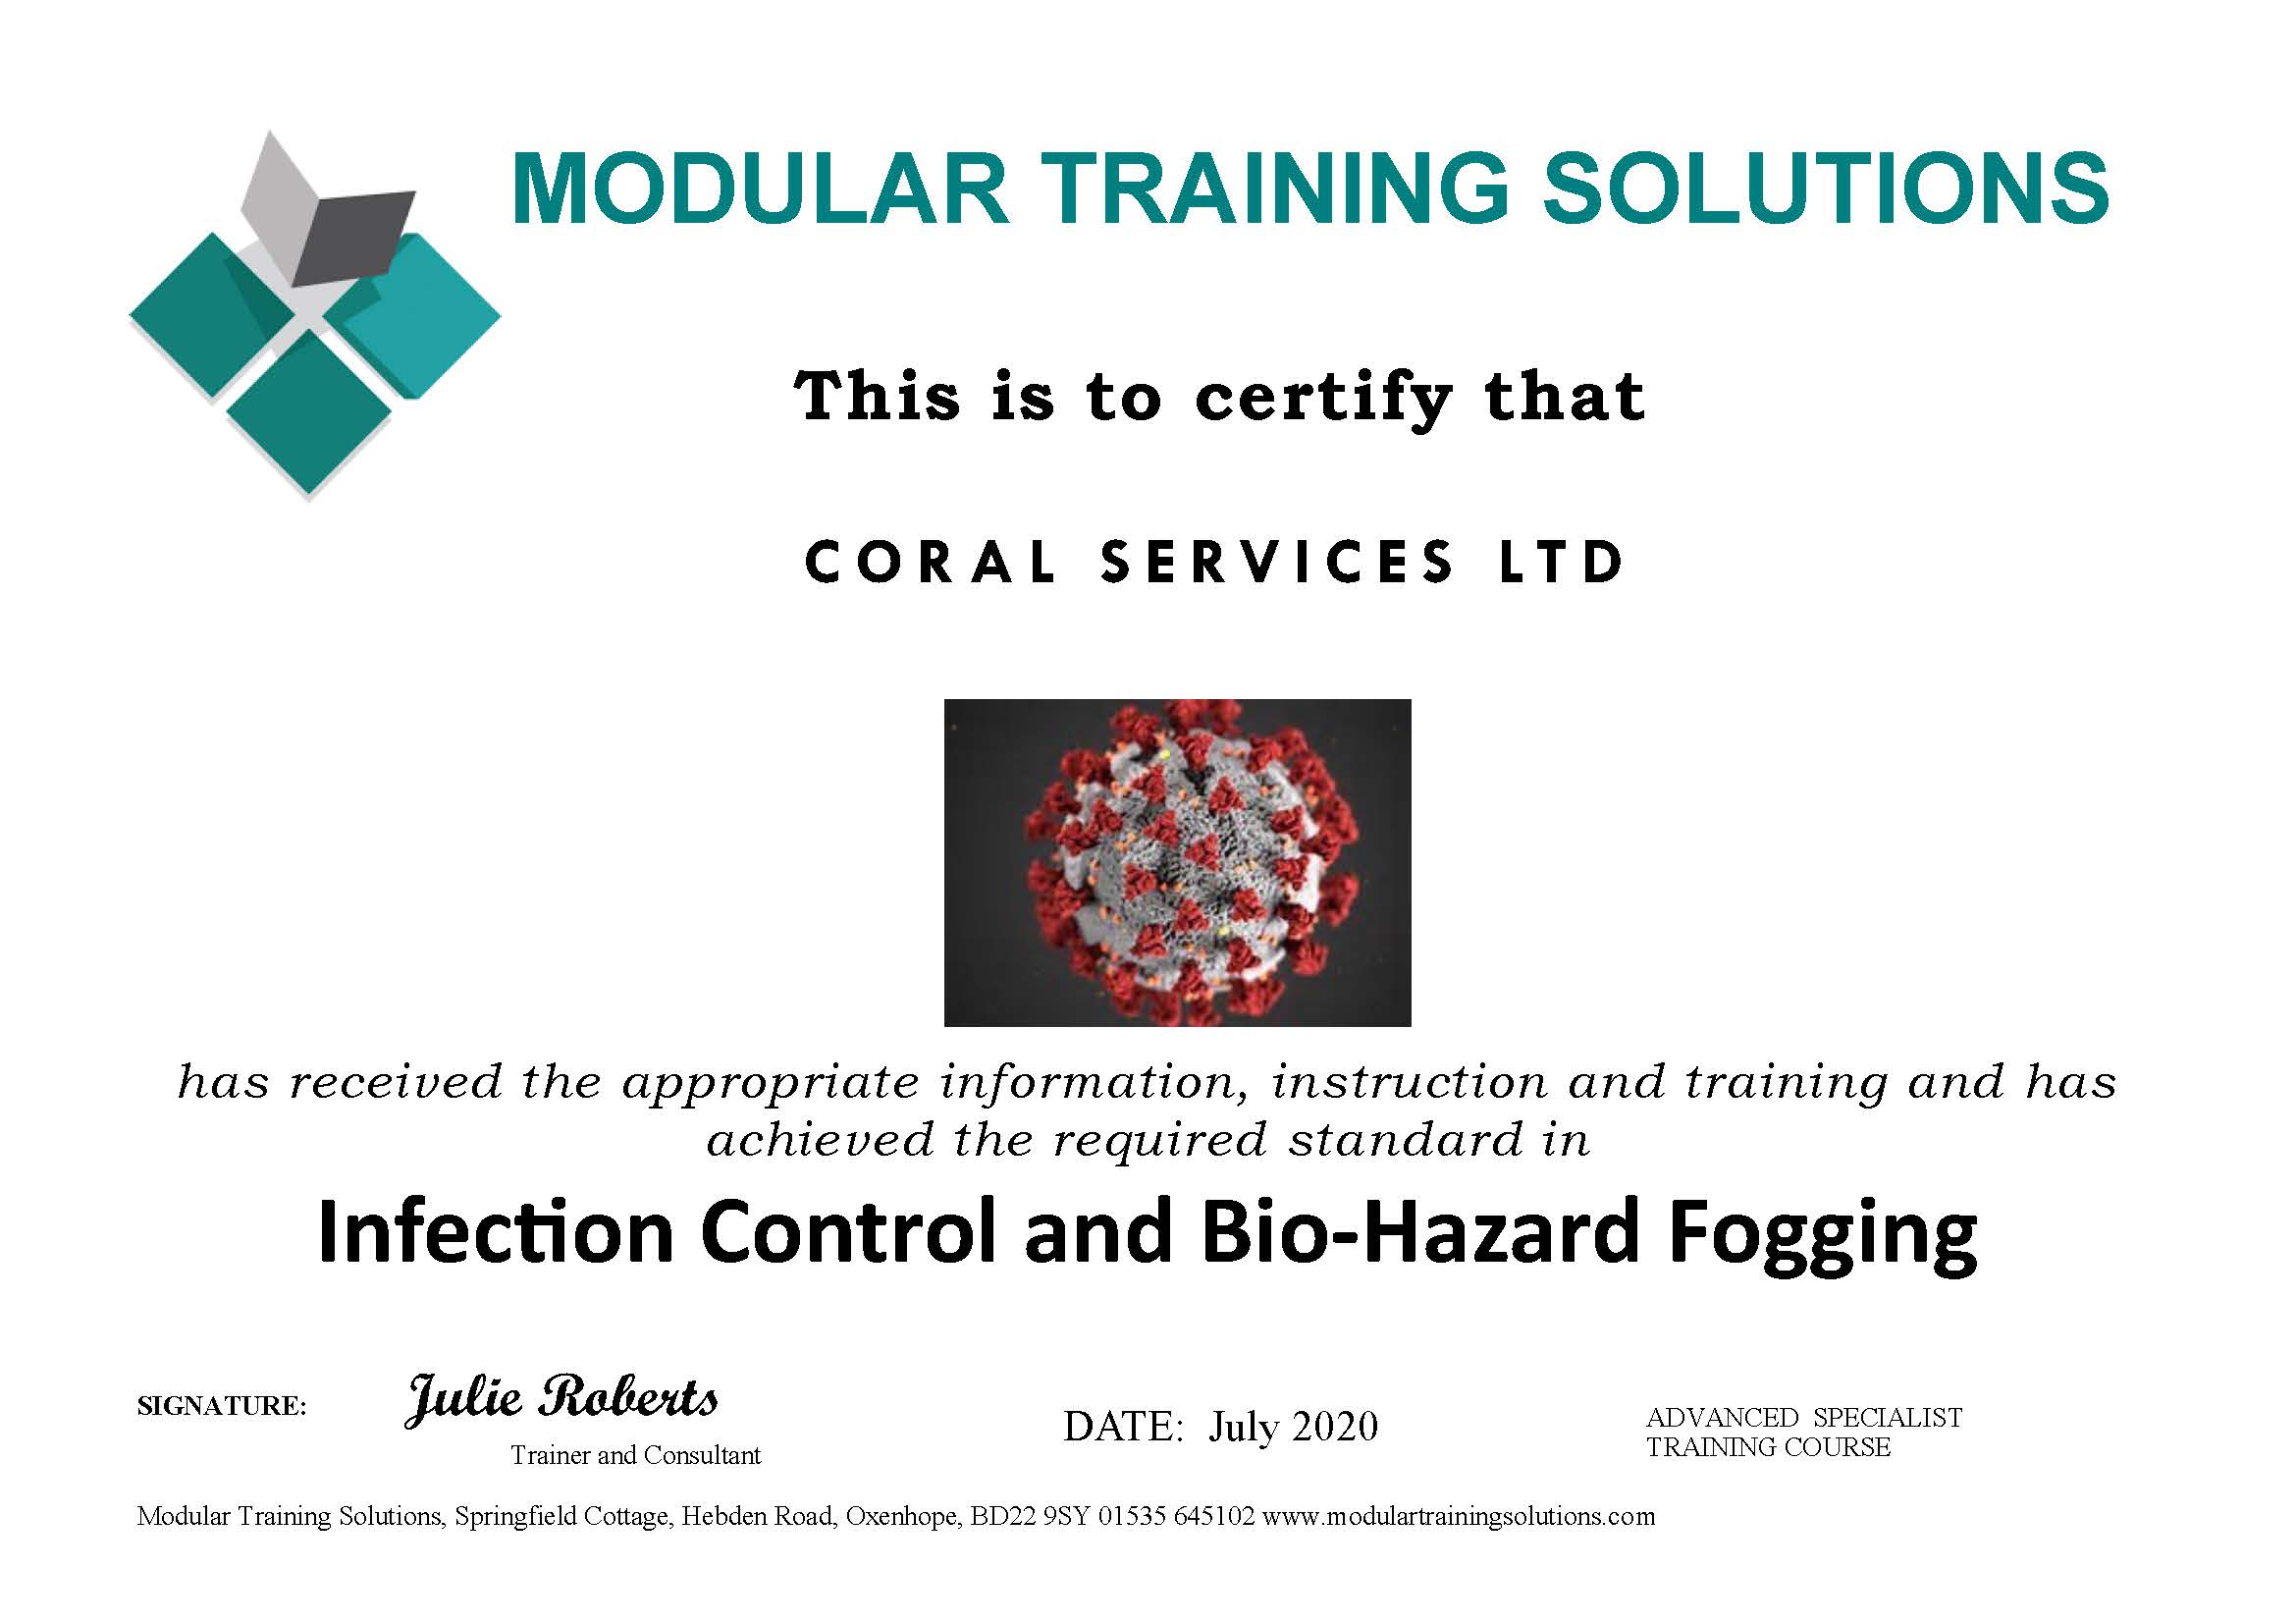 Disinfection Control and Bio-Hazard Fogging Certificate